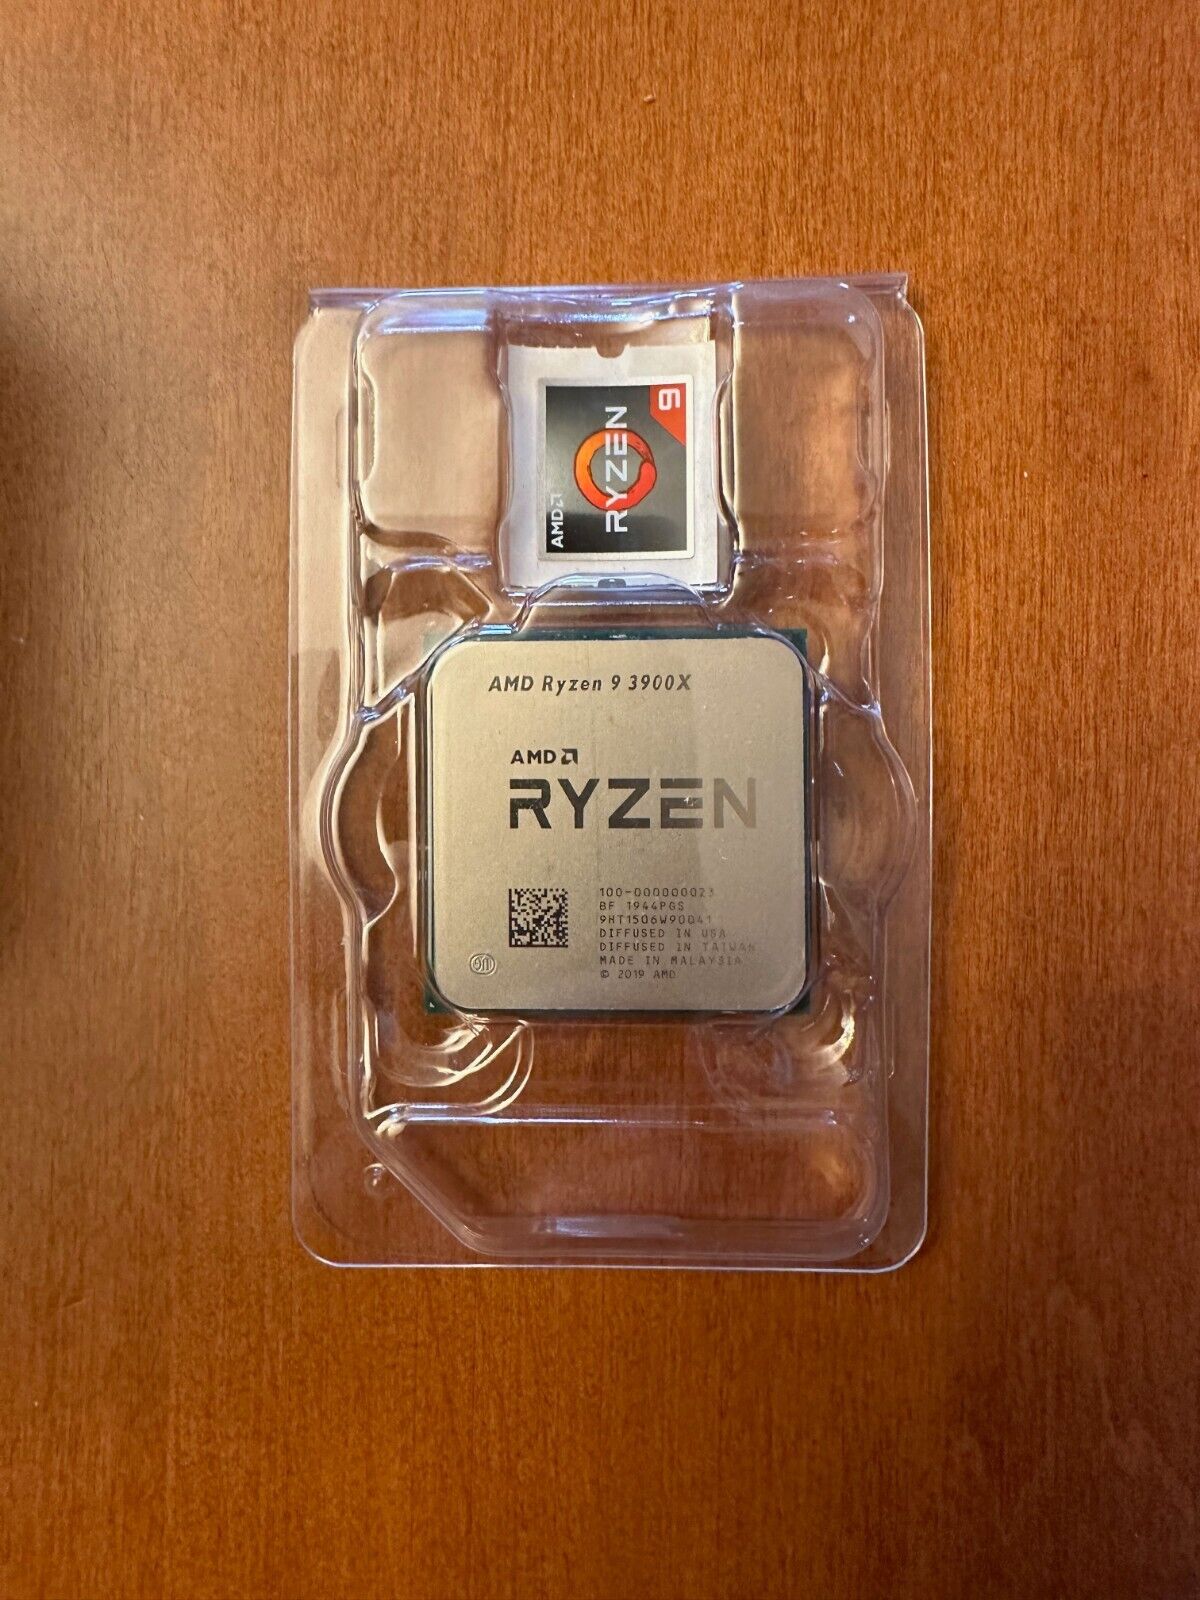 AMD Ryzen 9 3900X Processor (12-core/24-thread, 3.8GHz/4.6GHz) Retail Boxed AM4